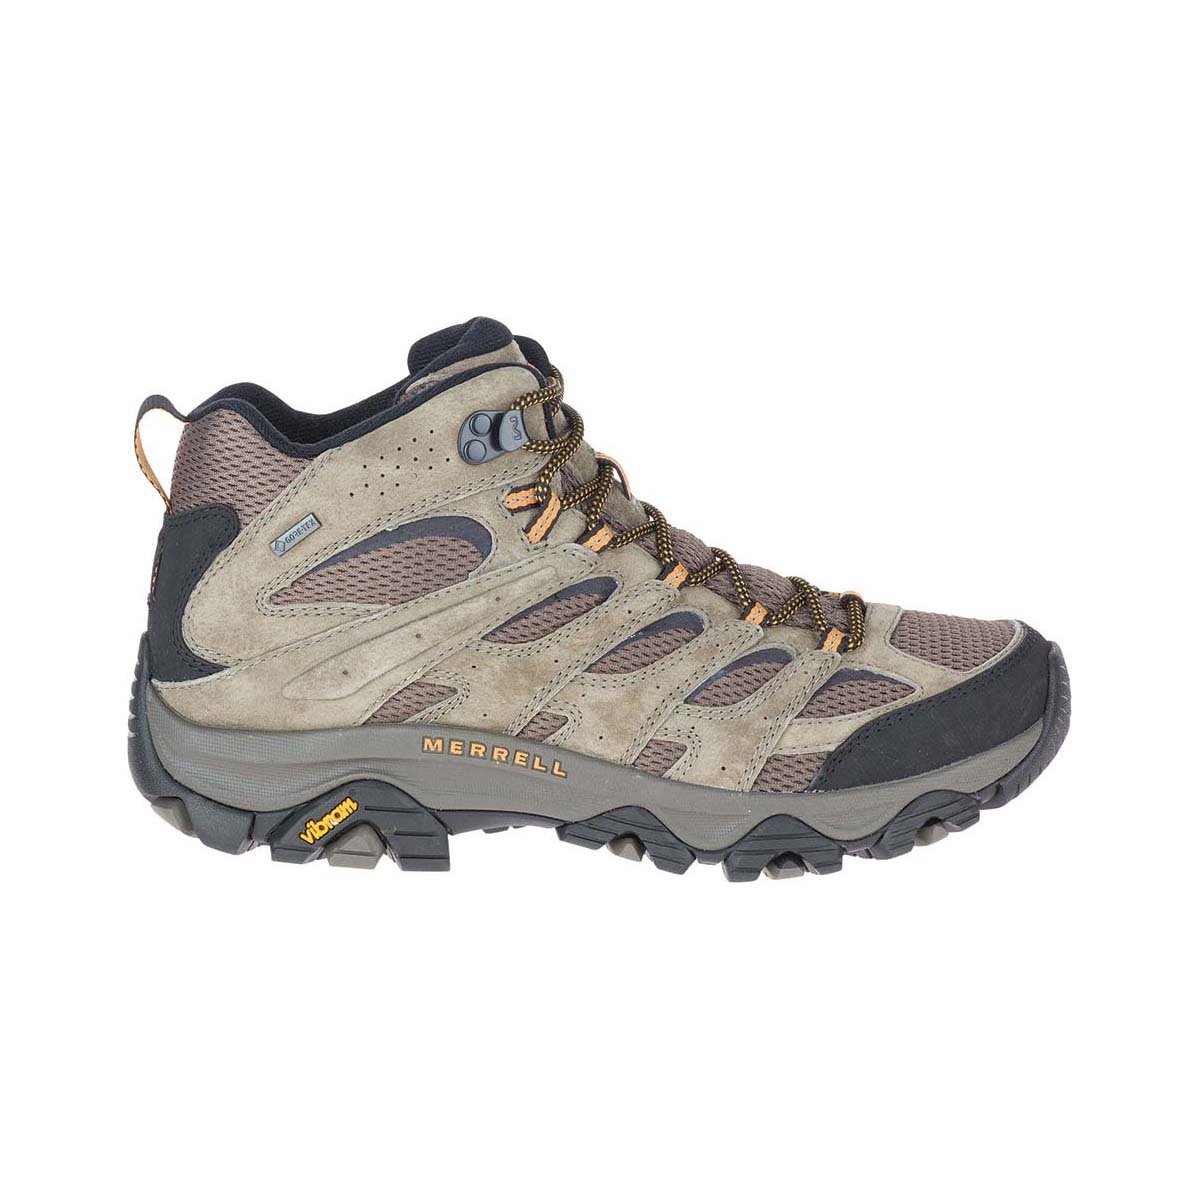 Merrell Men's Moab Mid GTX Hiking Boots 13